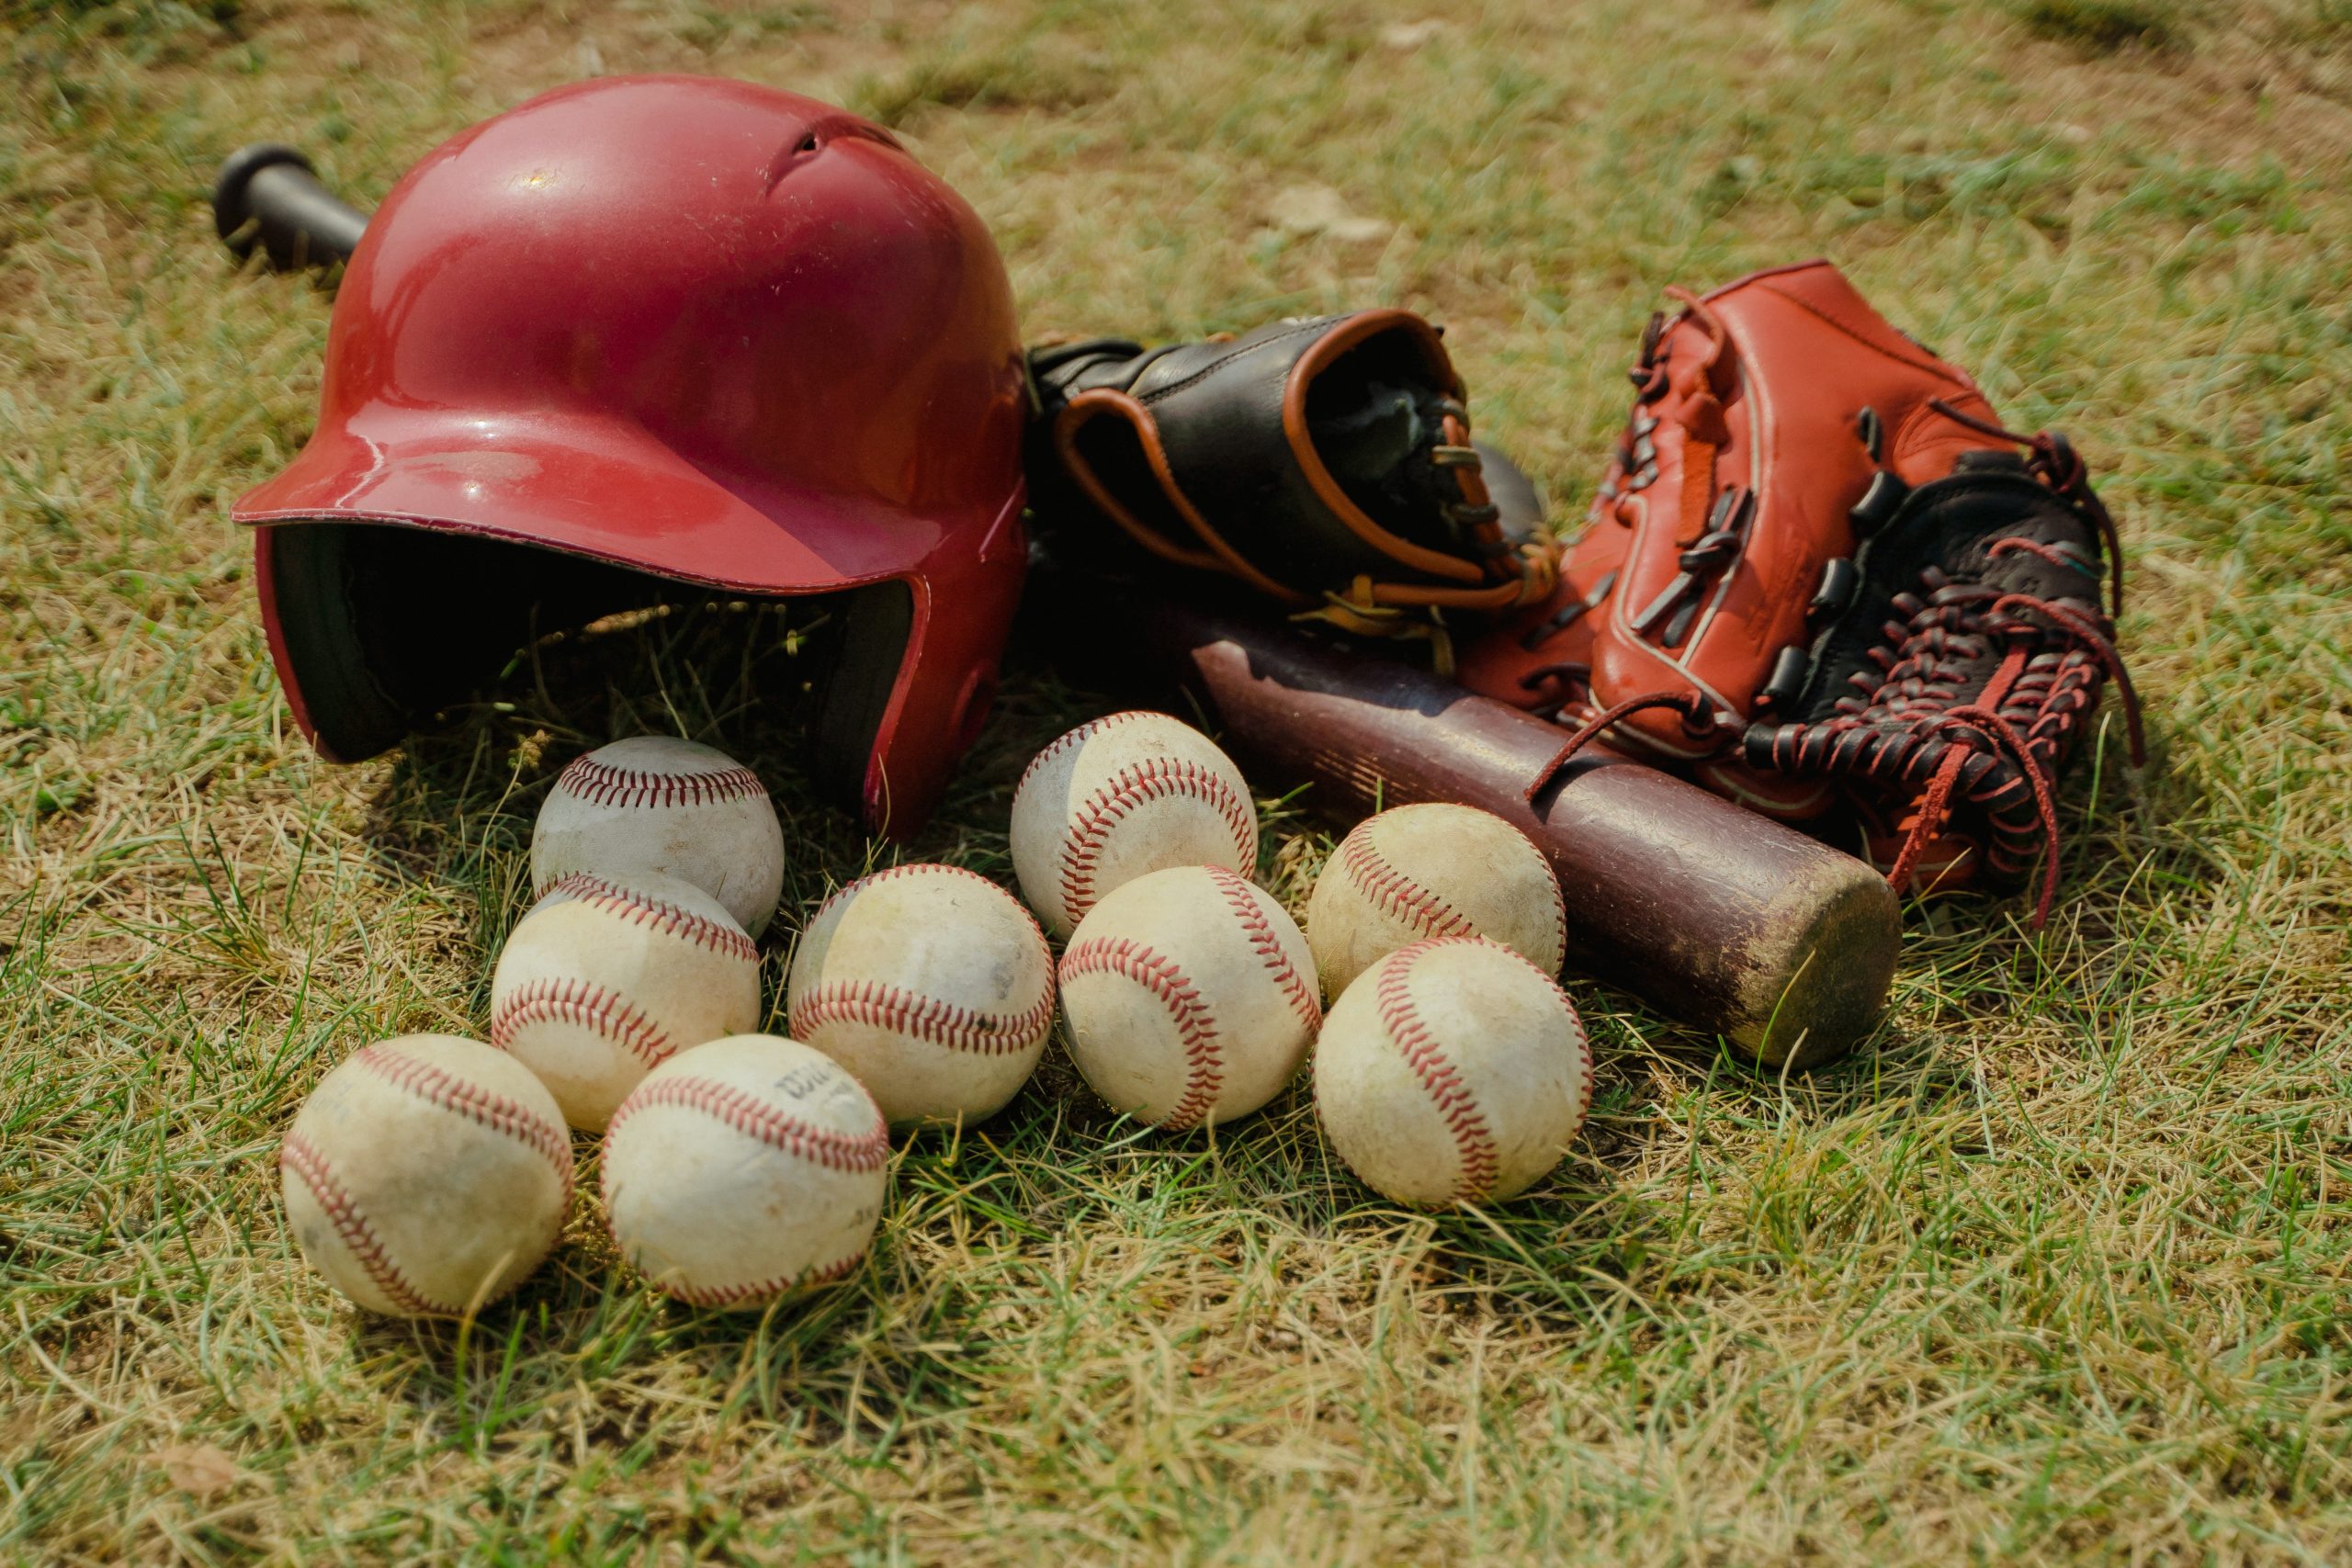 Photo by Tima Miroshnichenko: https://www.pexels.com/photo/red-baseball-helmet-on-green-grass-field-5184709/